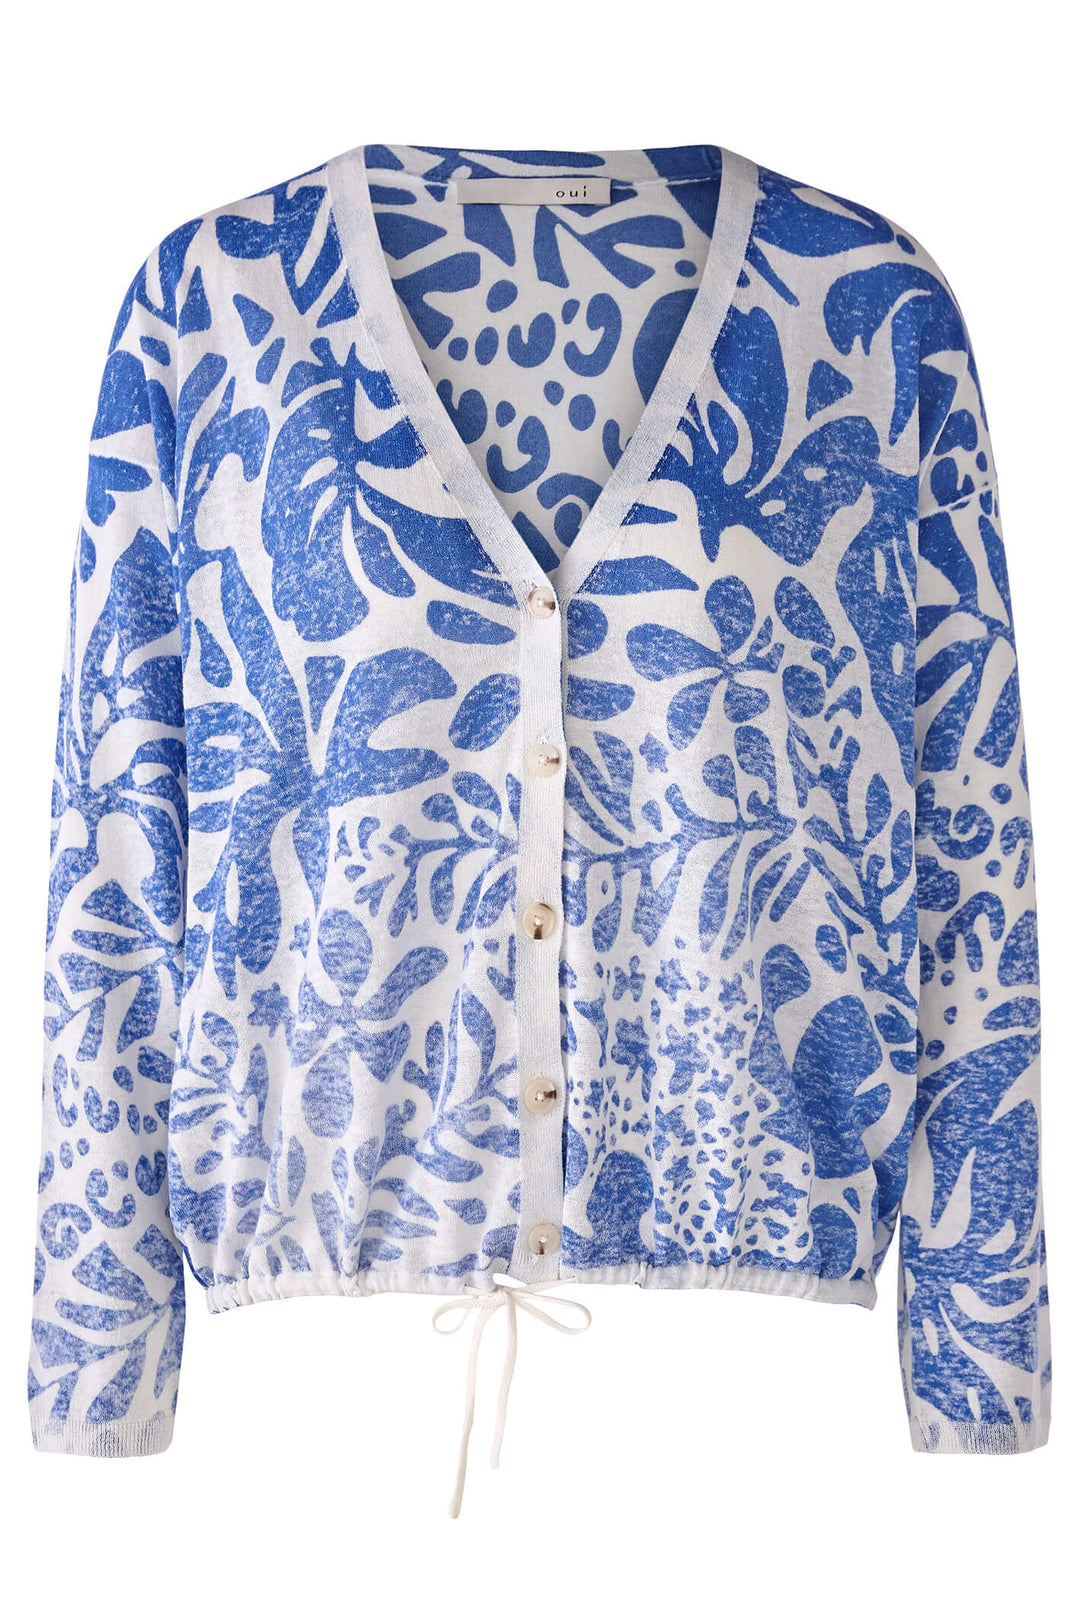 Oui 78627 White Blue Print Cardigan - Olivia Grace Fashion